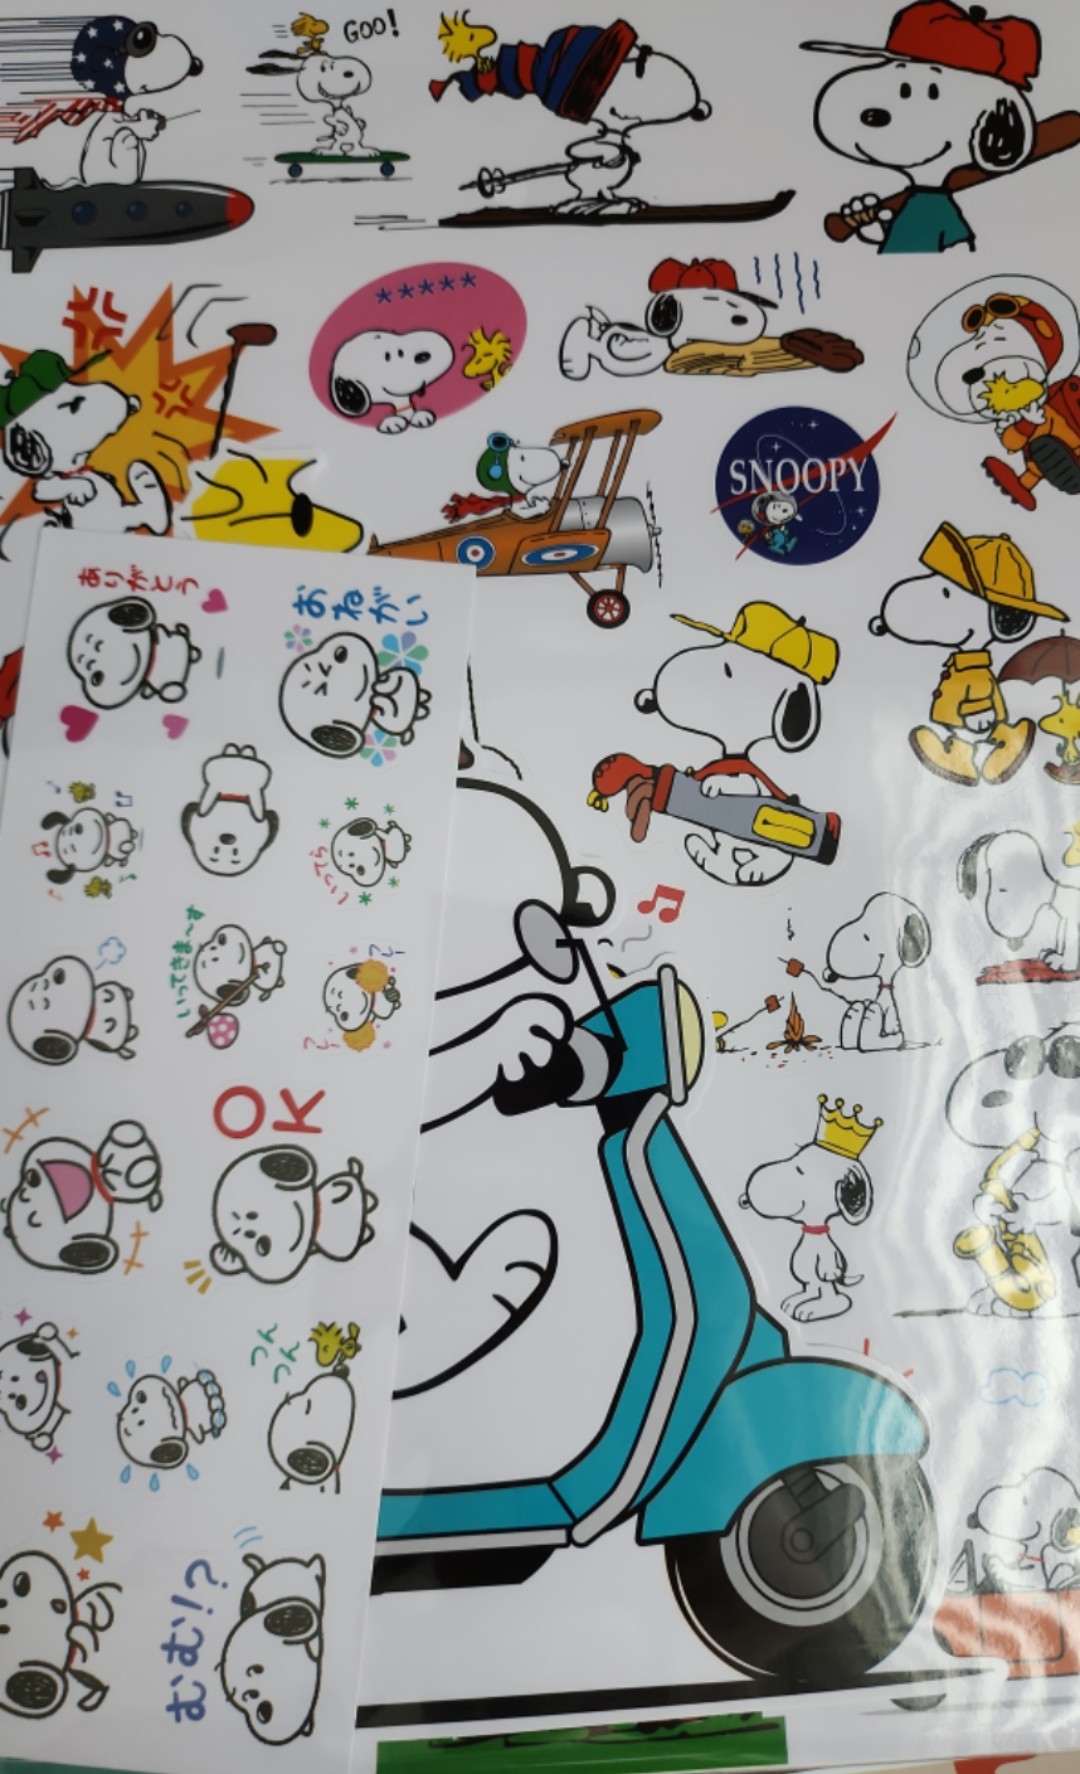 Studio Exclusive) Snoopy - Peanuts Character Beagle Cartoon Waterproof Decal  Stickers